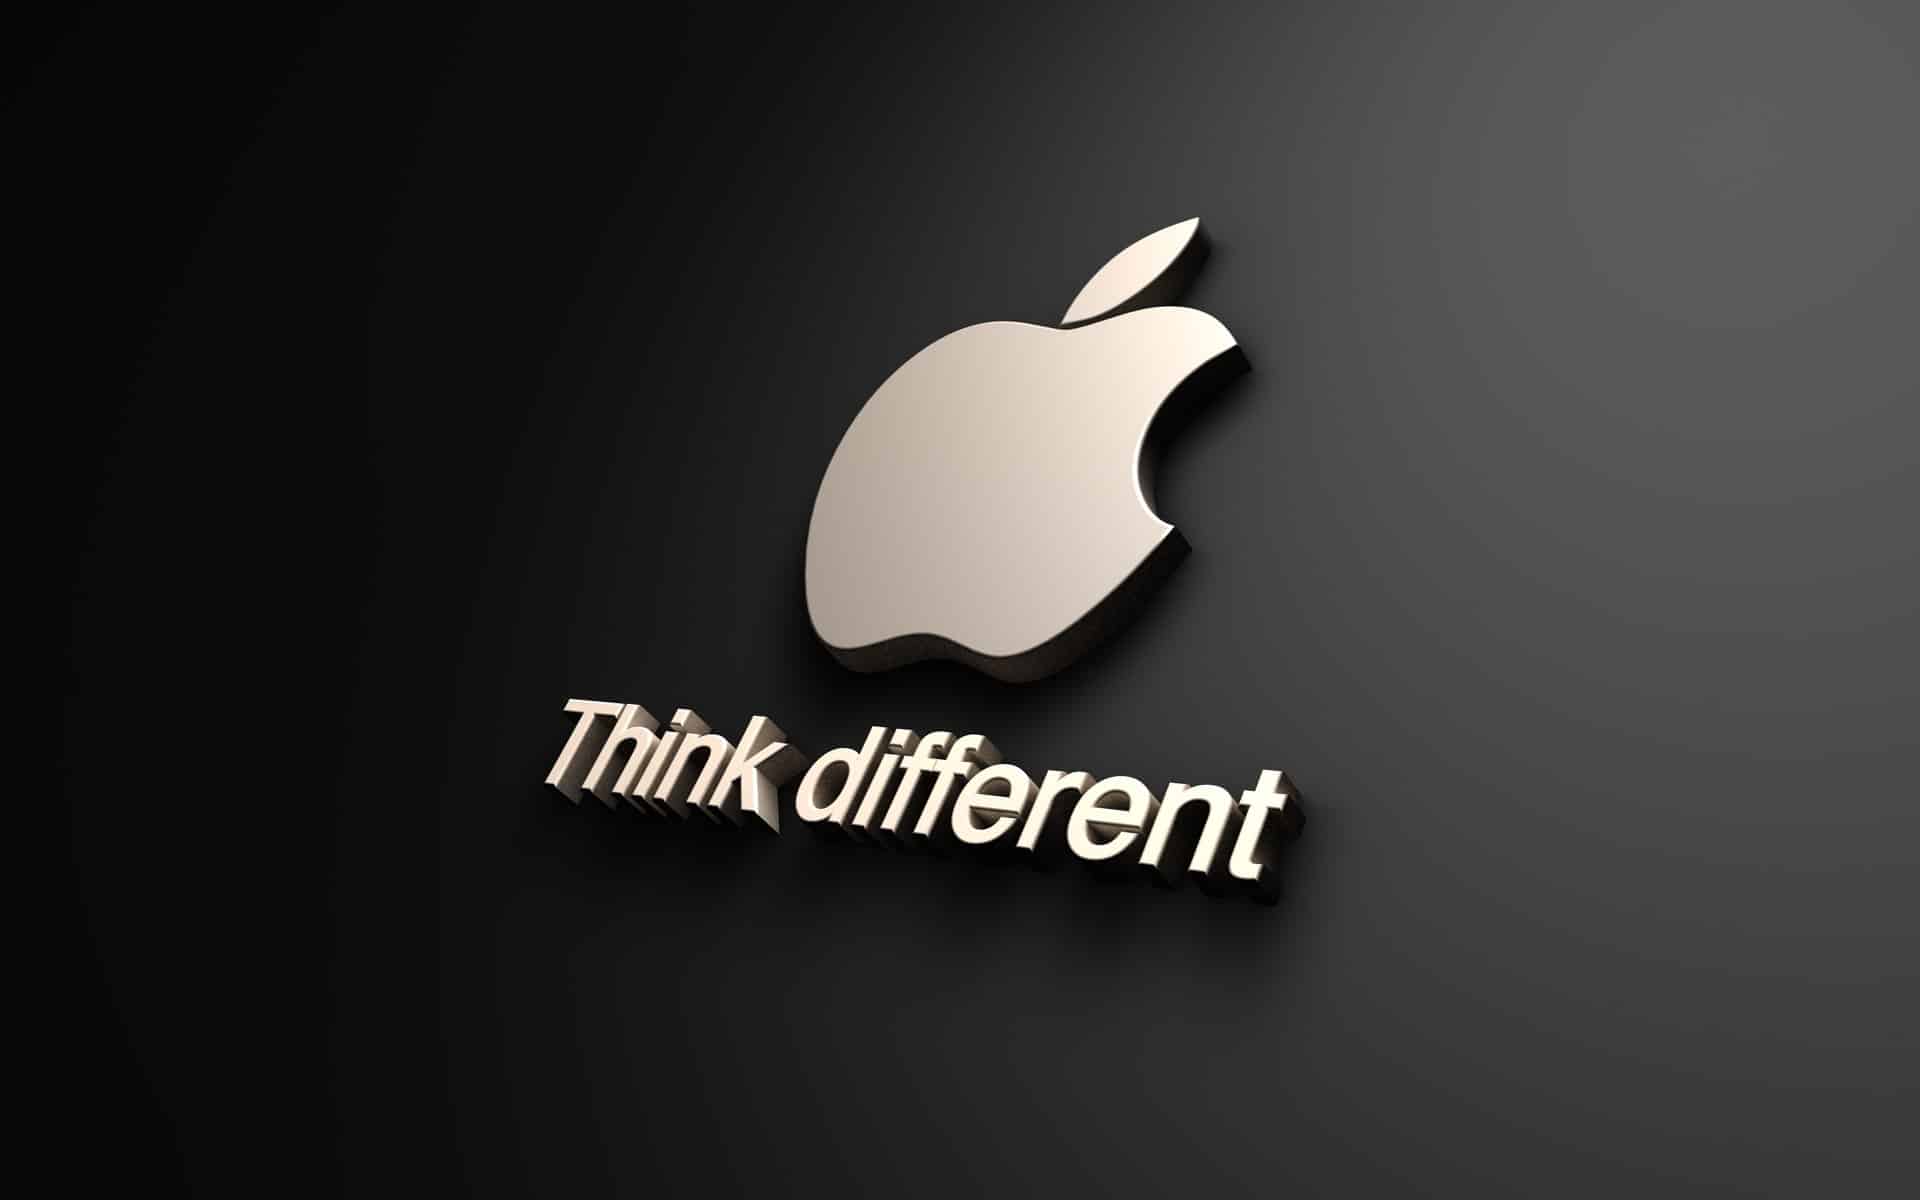 Apple contra Samsung o inventores contra plagiadores